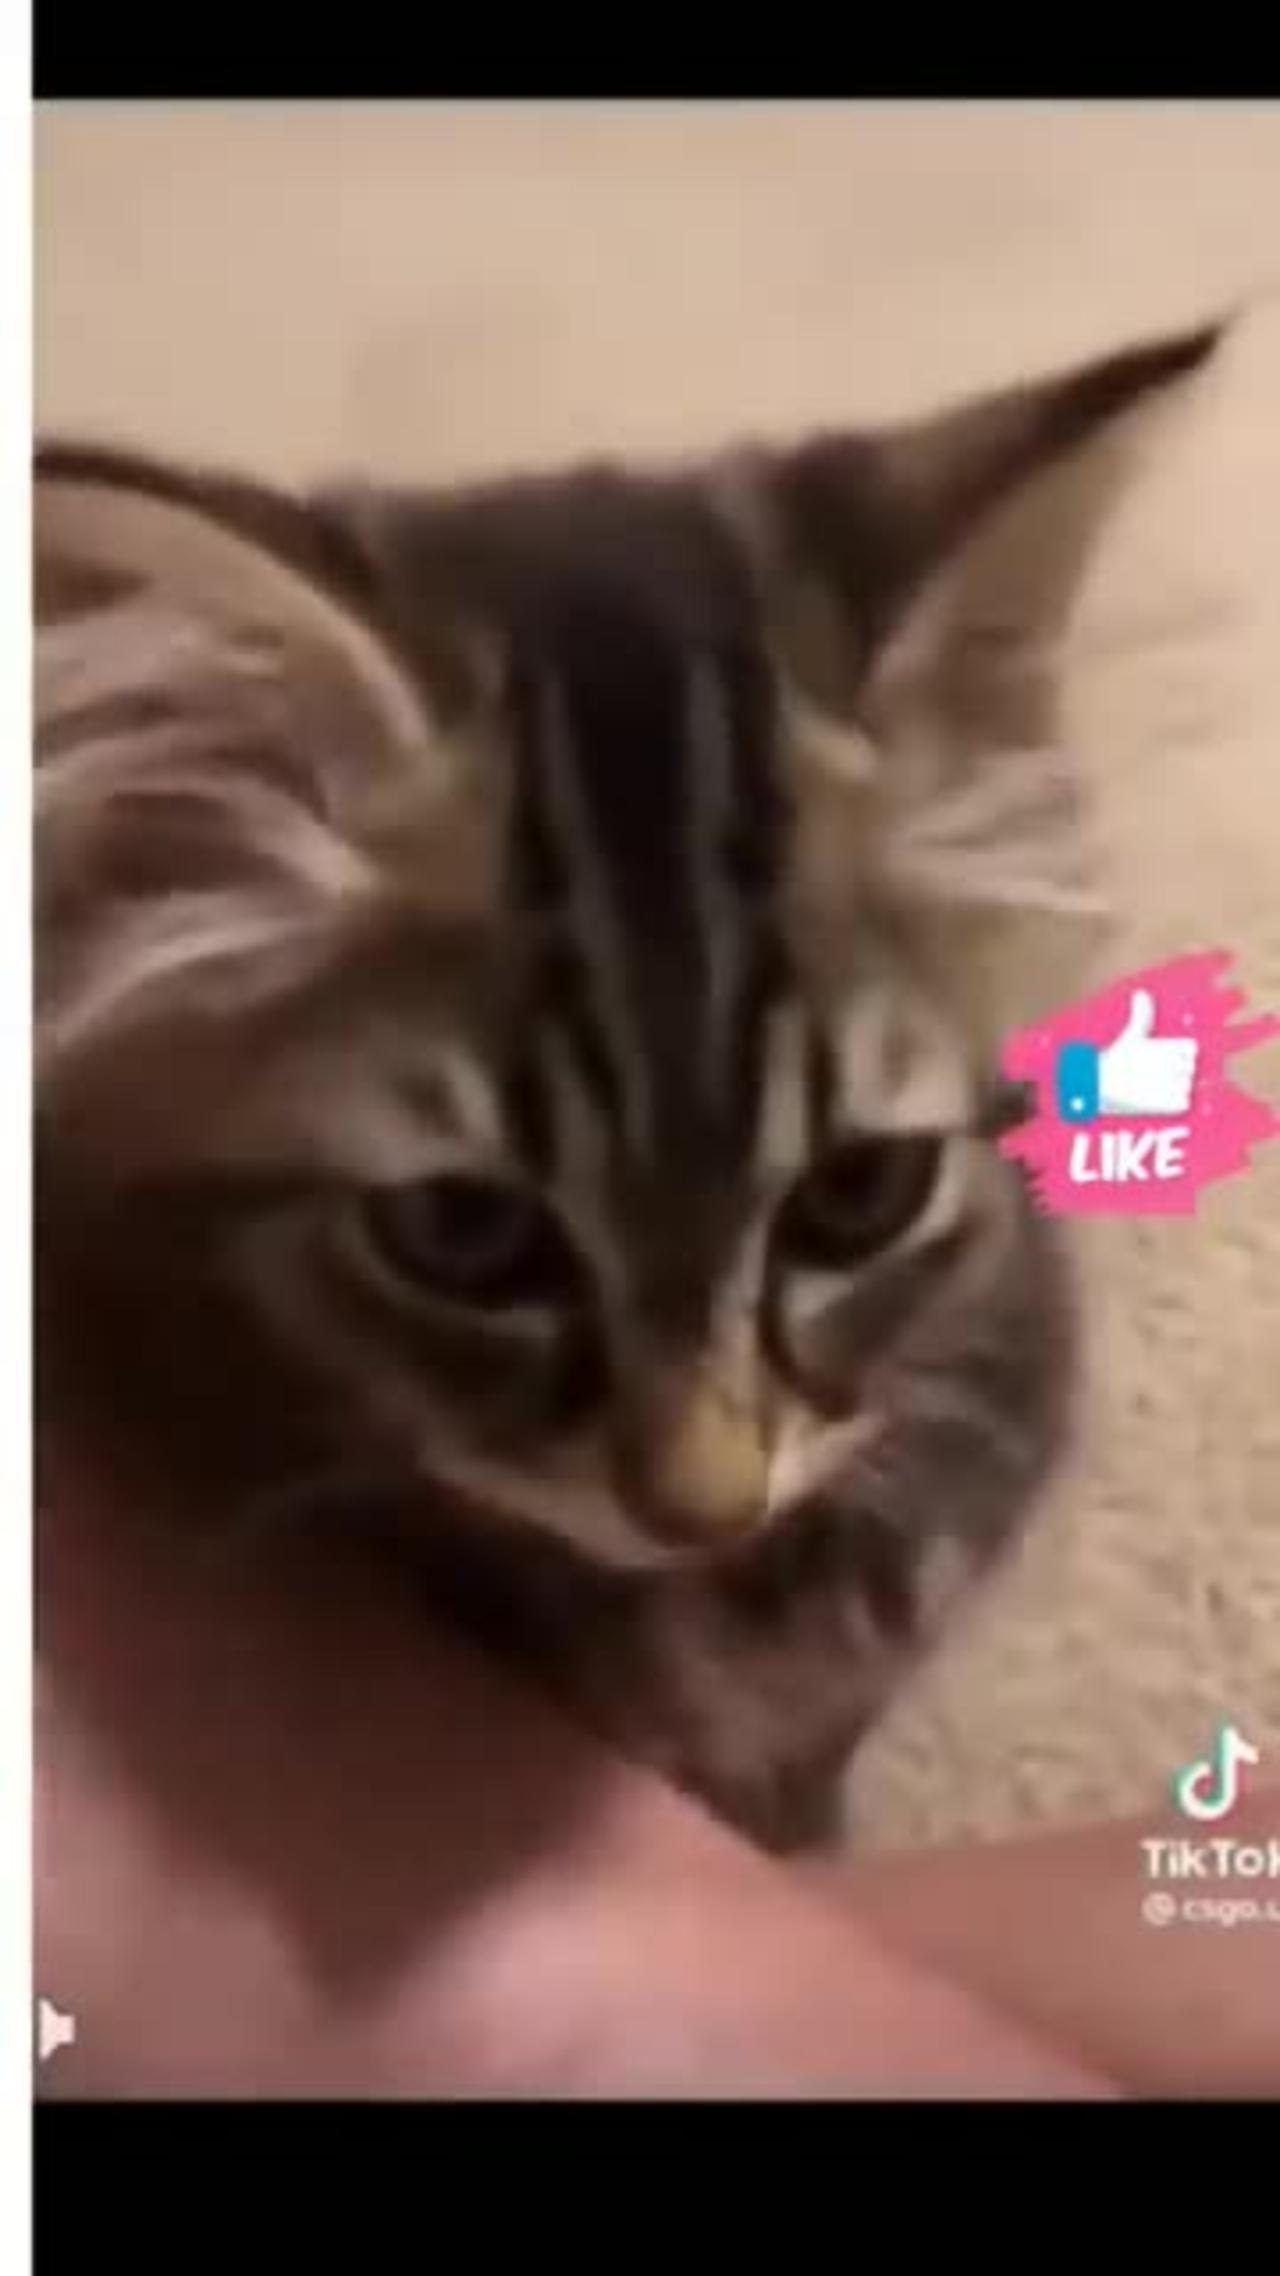 Cute animals video funniest cat pummy viral video cute cat and dog videos